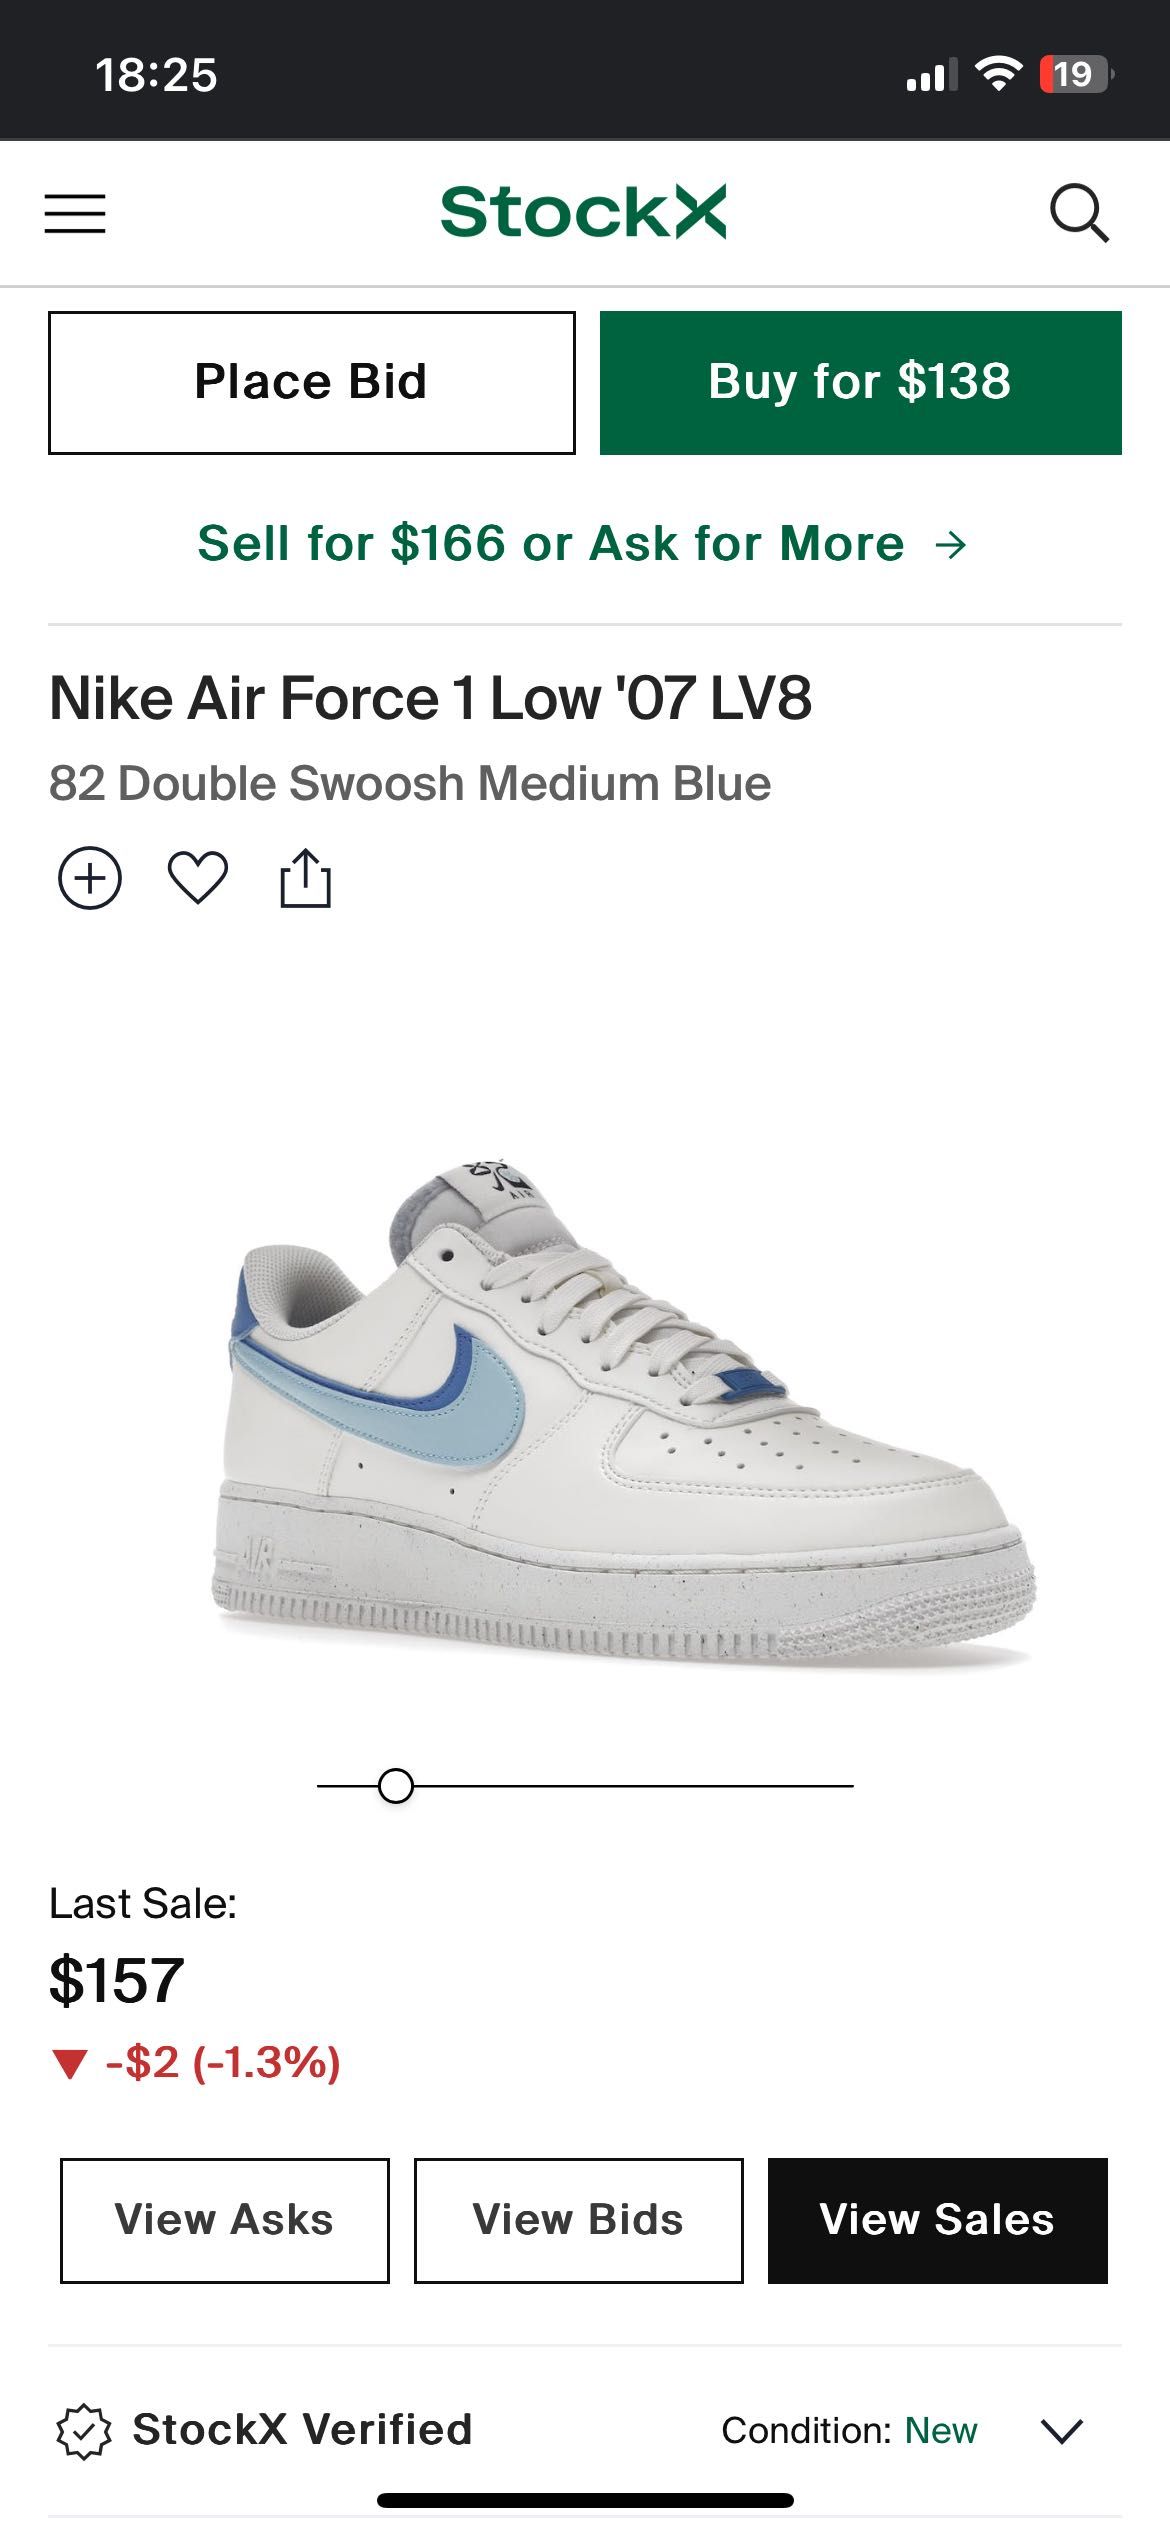 Nike Air Force 1 Low '07 LV8
82 Double Swoosh Medium Blue